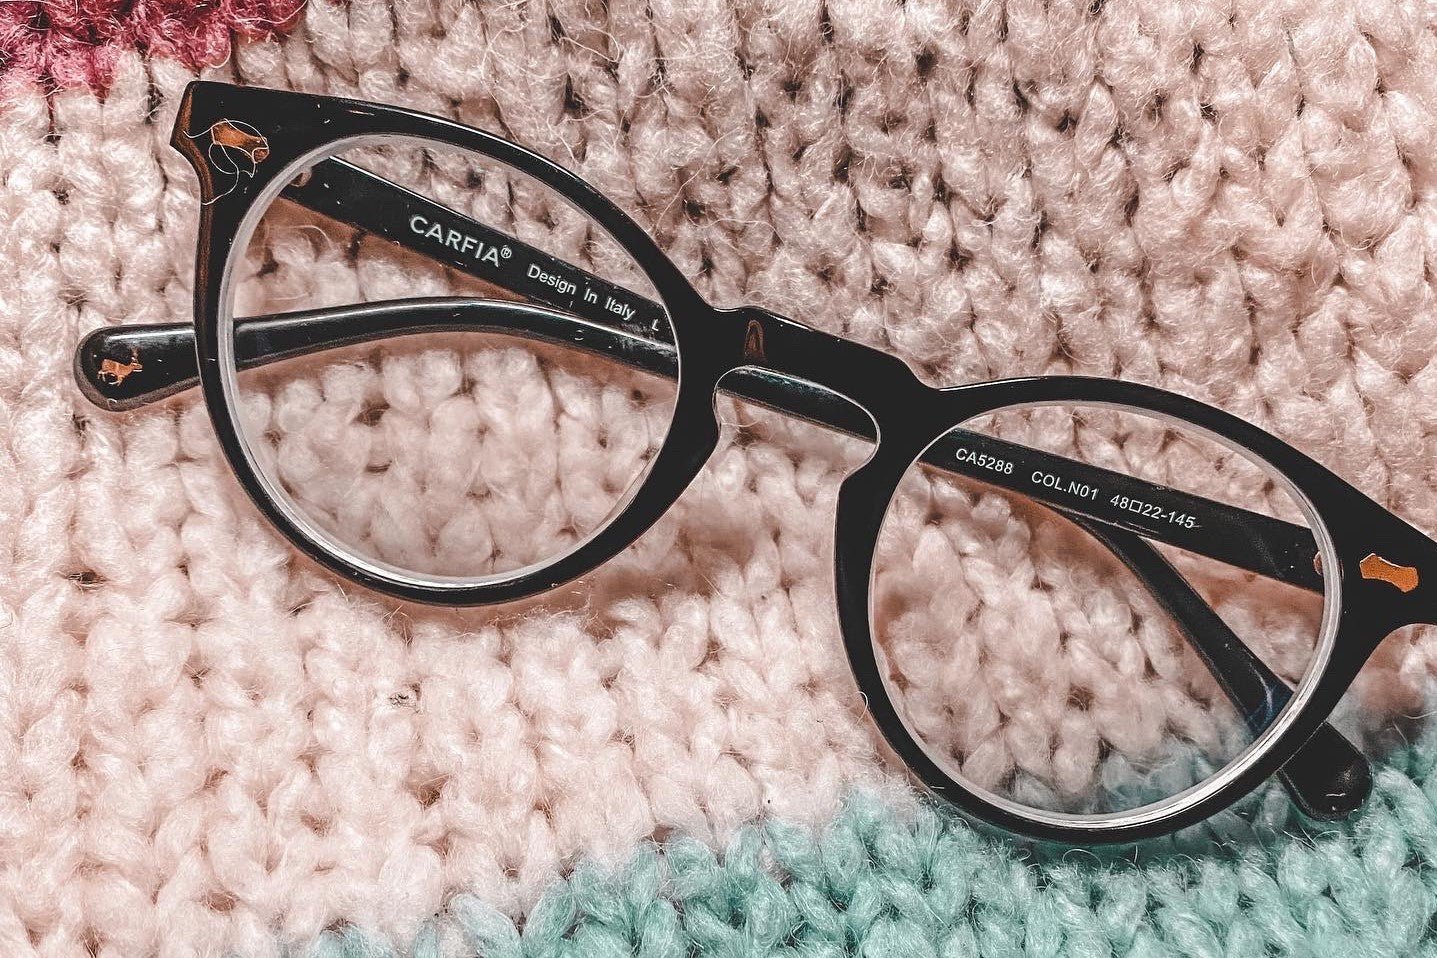 Why Won'T The Screw On My Glasses Tighten? | KOALAEYE OPTICAL